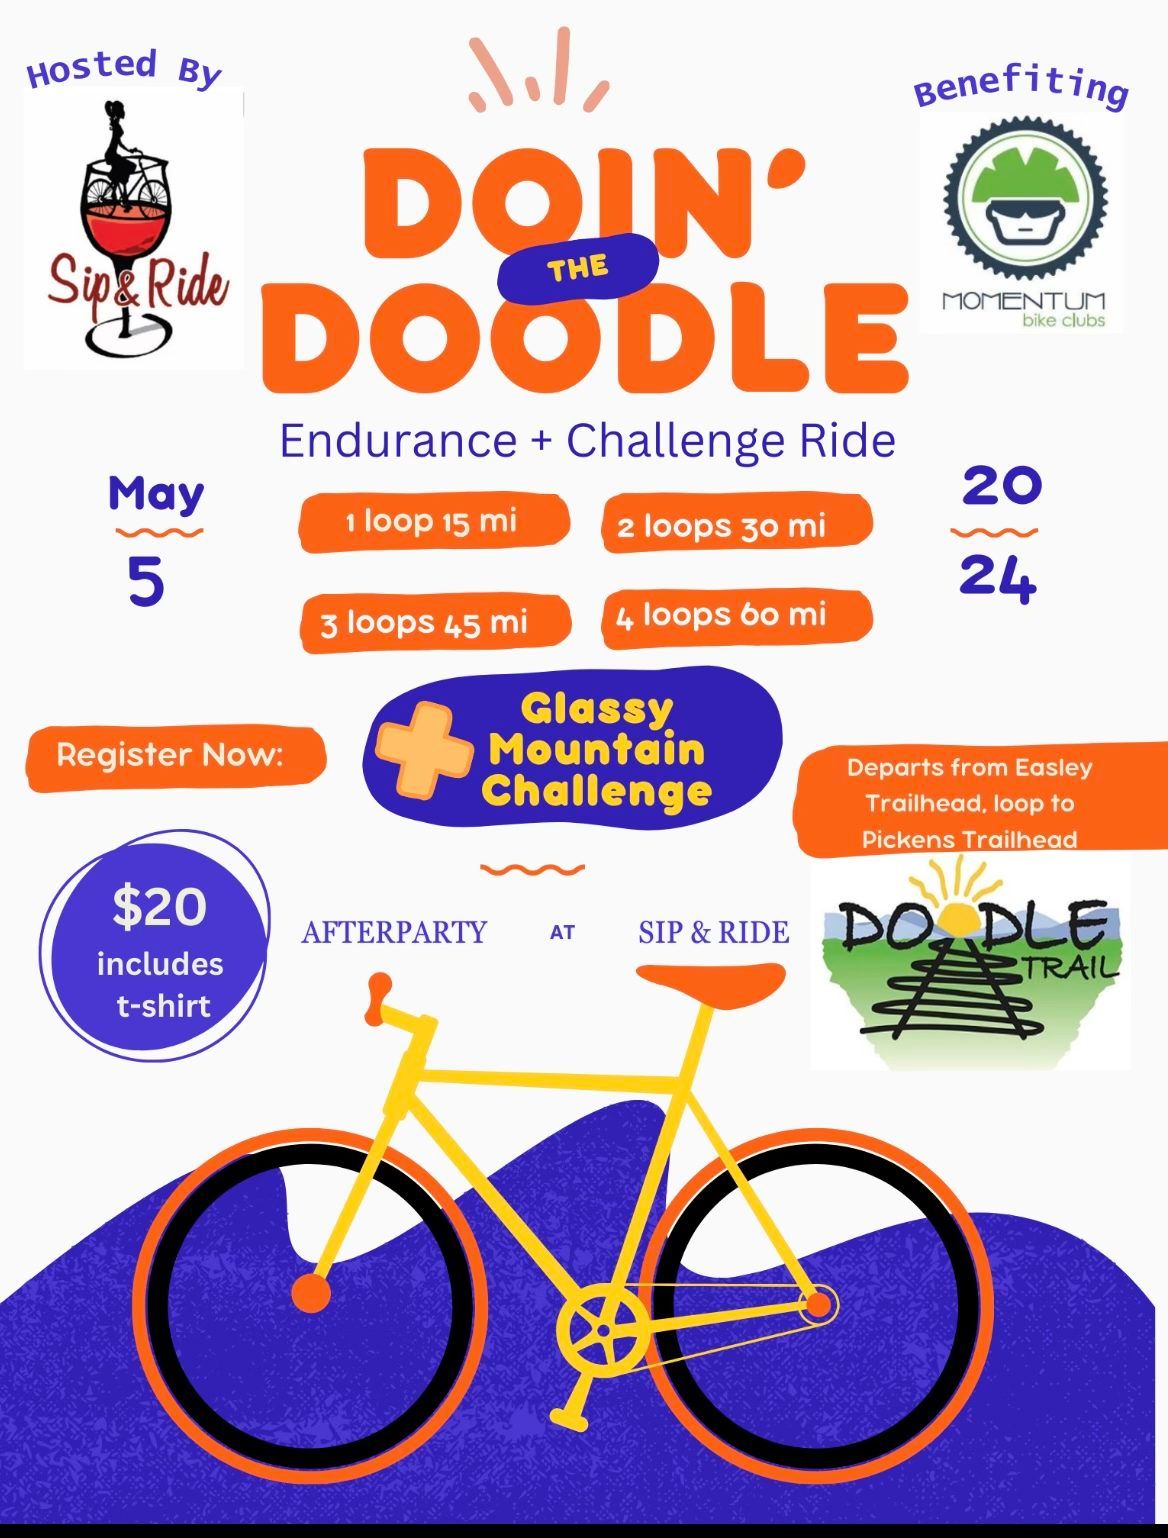 Doin' the Doodle | Endurance + Challenge Ride